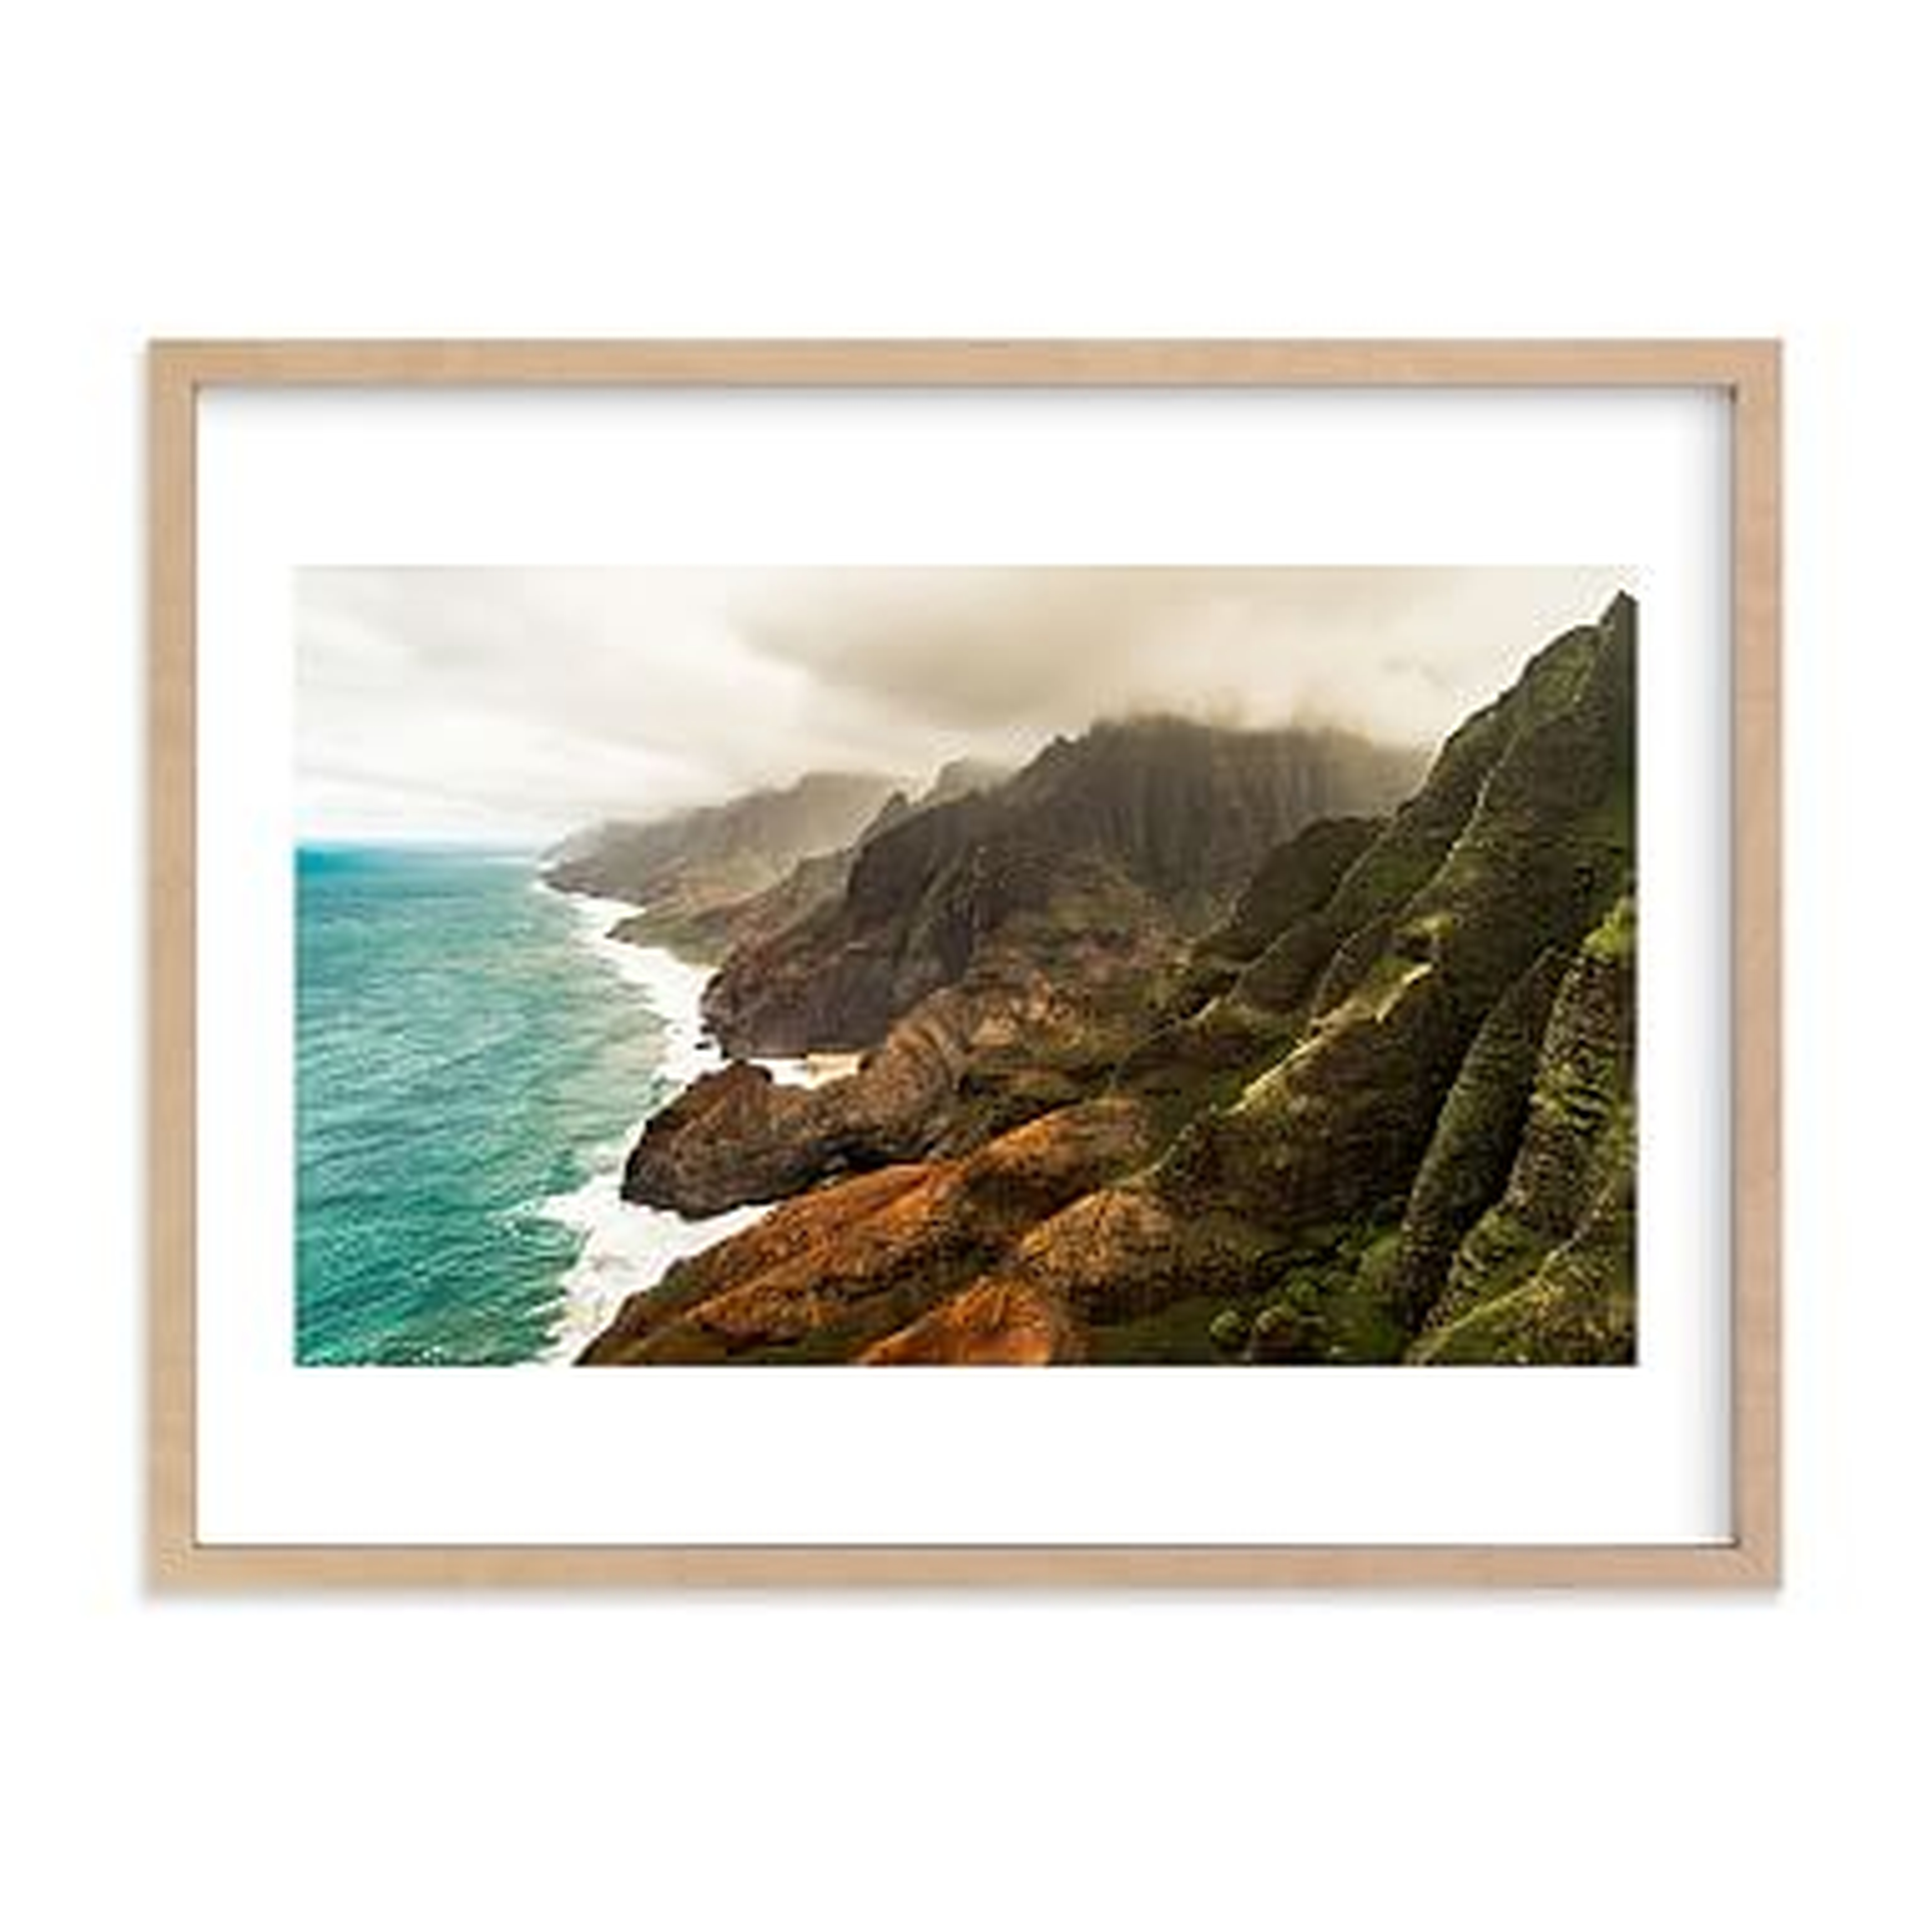 Na Pali Coast, Kauai, HI Framed Art by Minted(R), 18"x24", Natural - Pottery Barn Teen